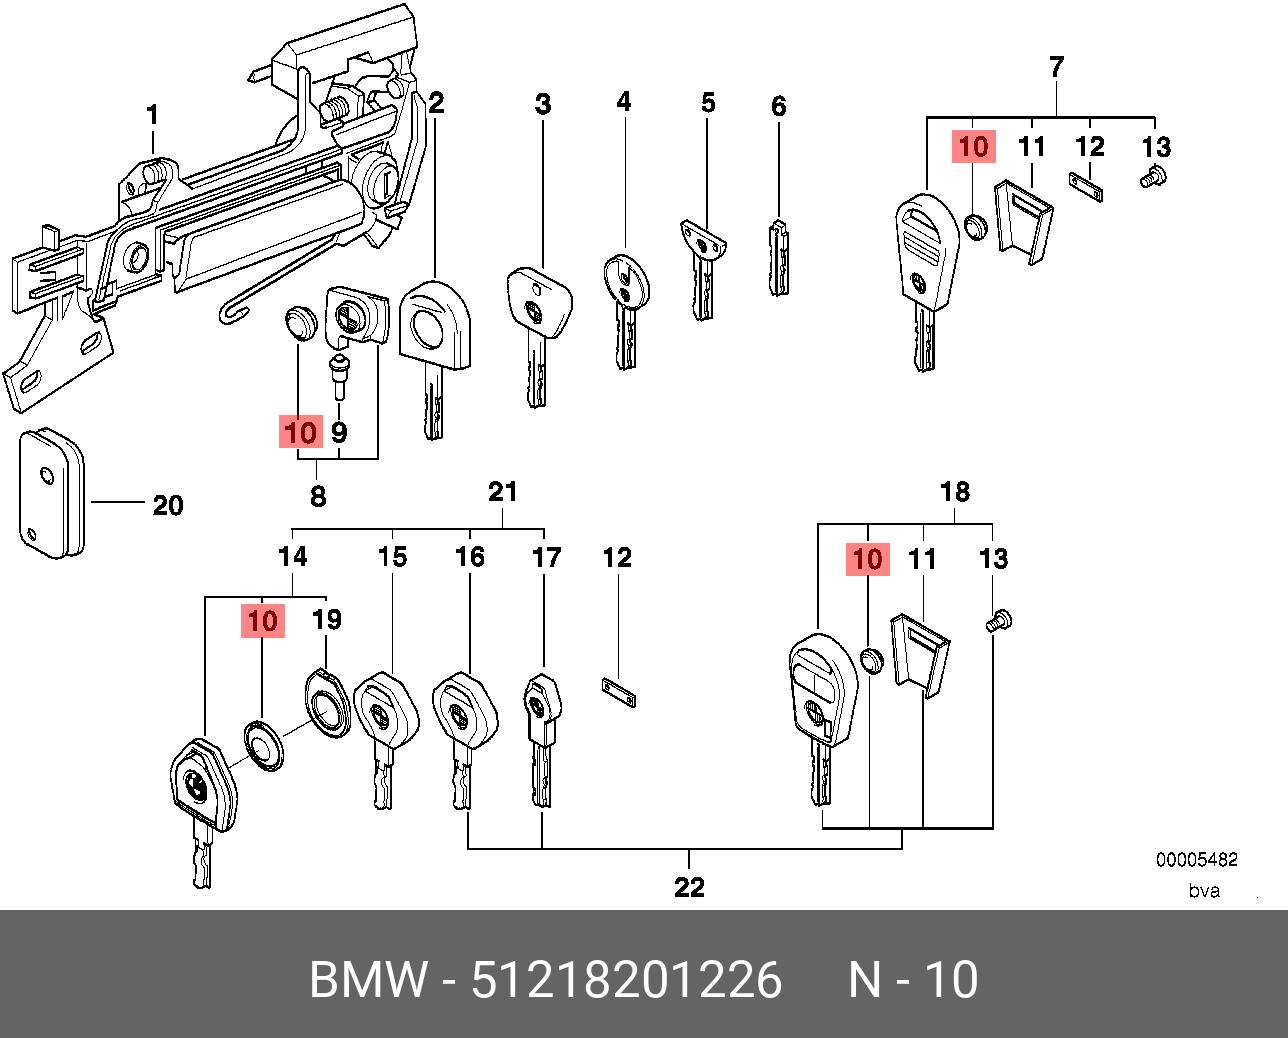 51 21 4 5 5. Ручка двери BMW e23. Механизм 5 двери BMW e34. Схема замка двери БМВ е34. Ручка двери BMW e34.